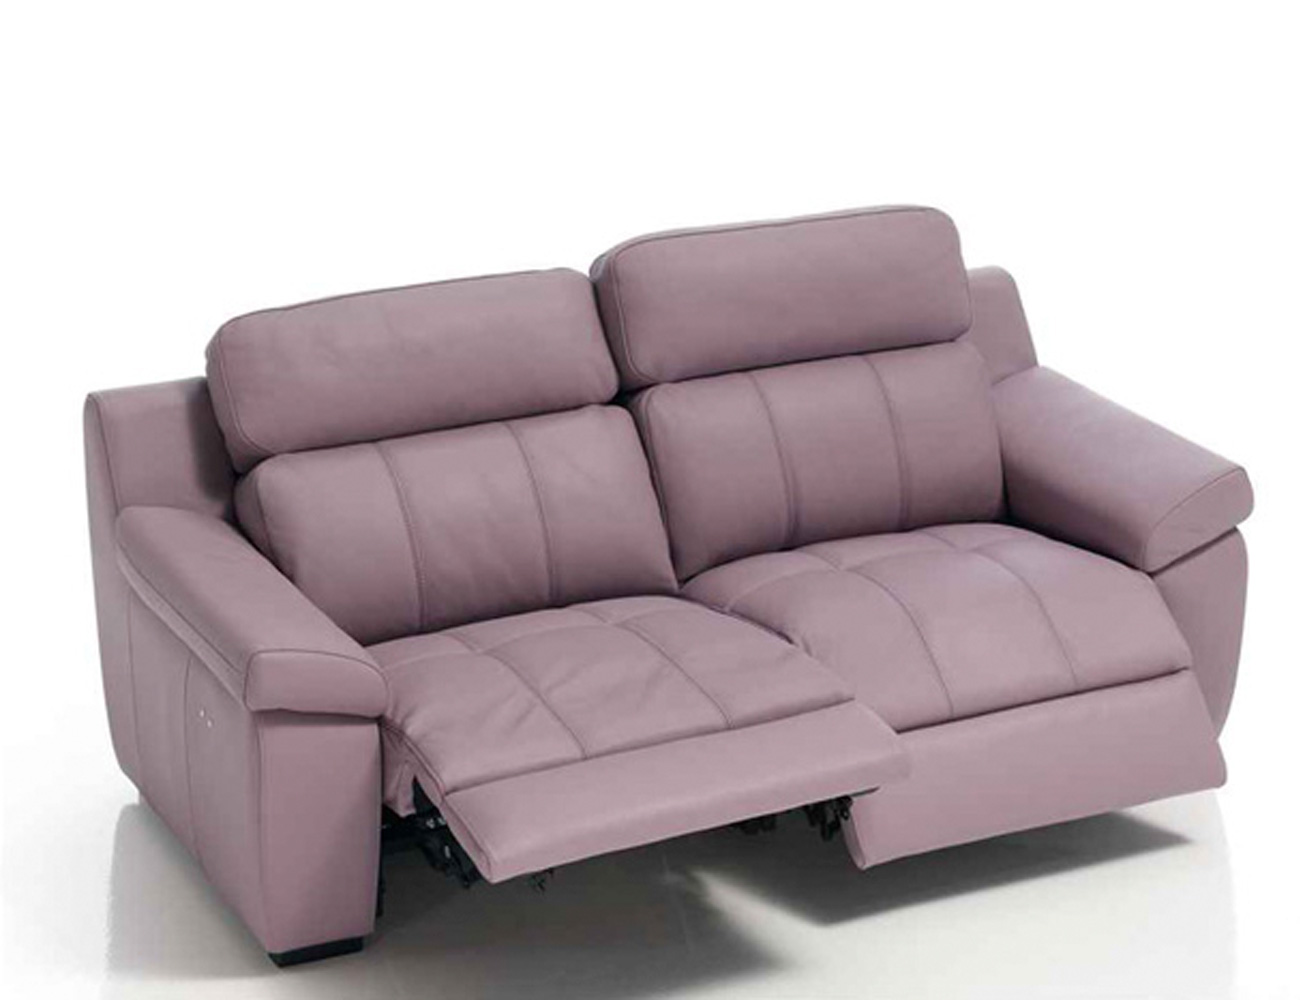 Sofa 3 2 relax electrico 2